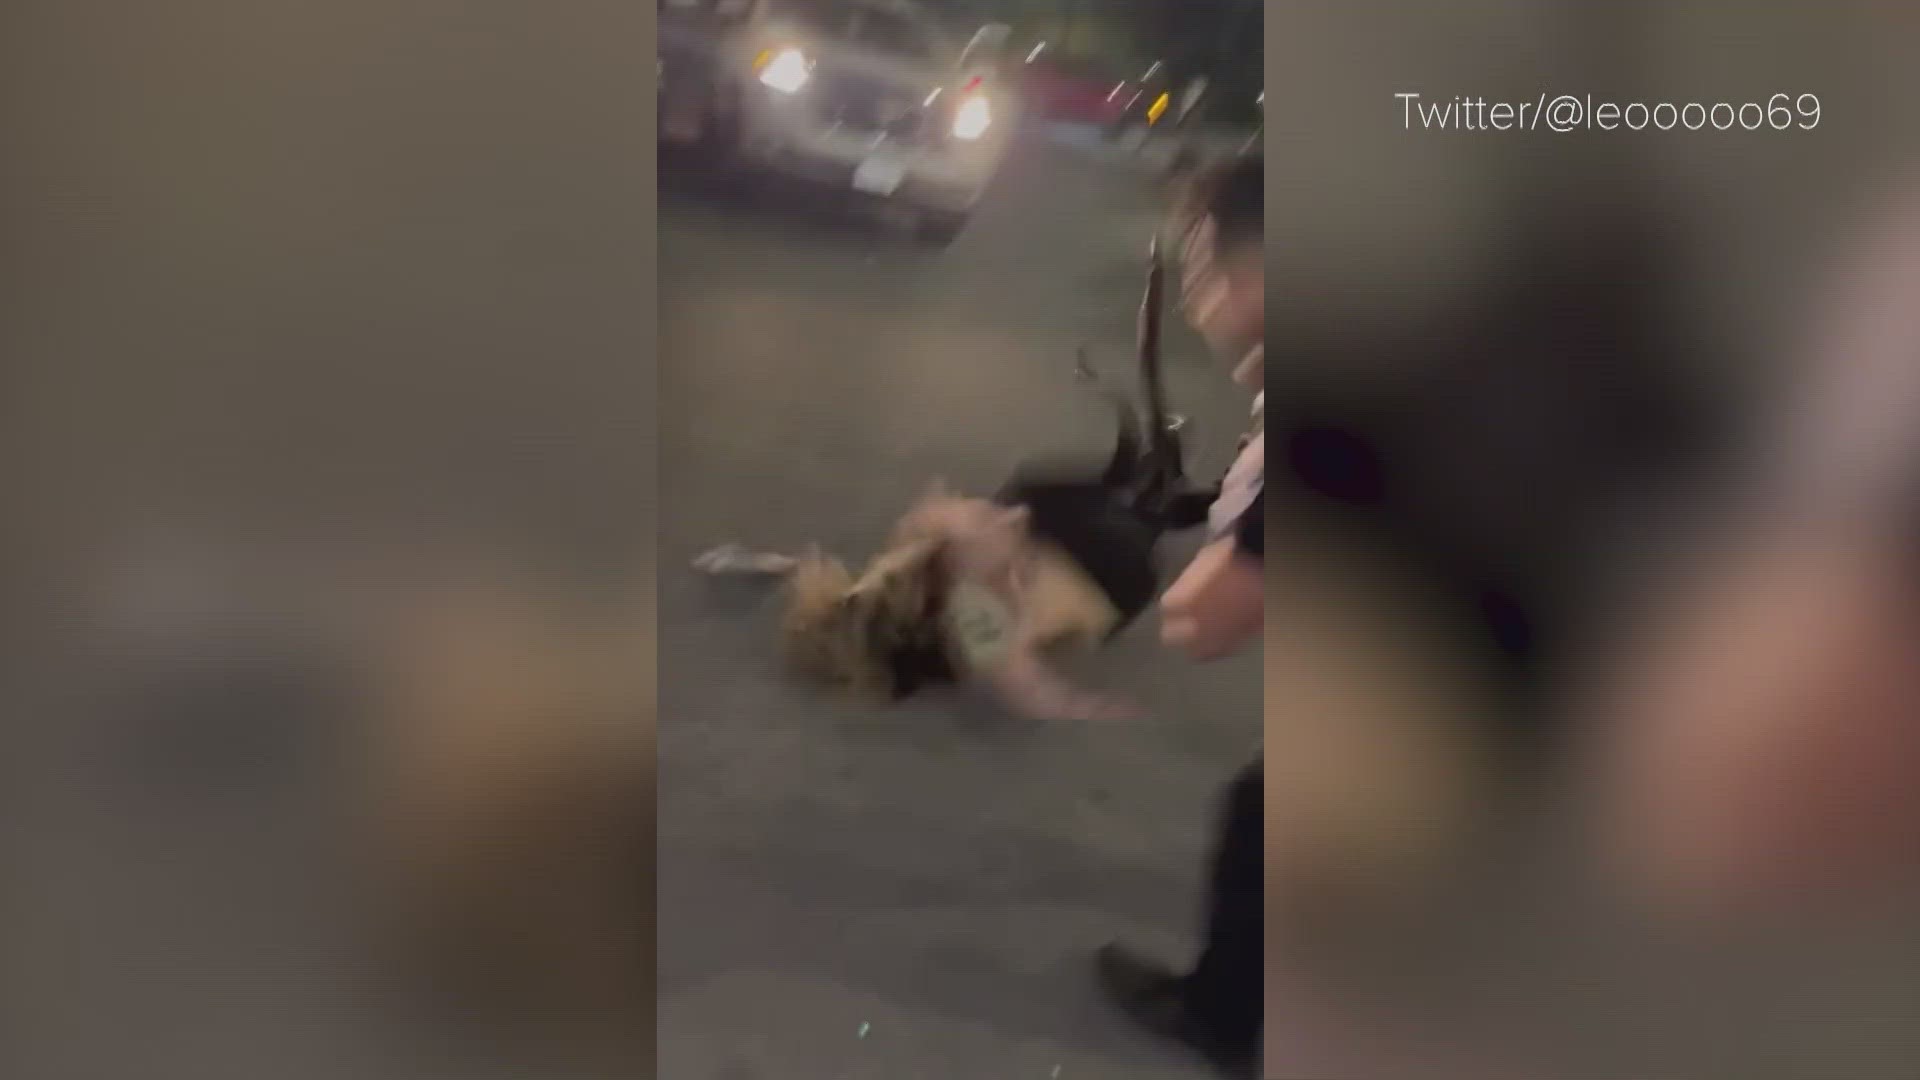 San Antonio brawl Video shows security slamming woman to ground kens5 picture